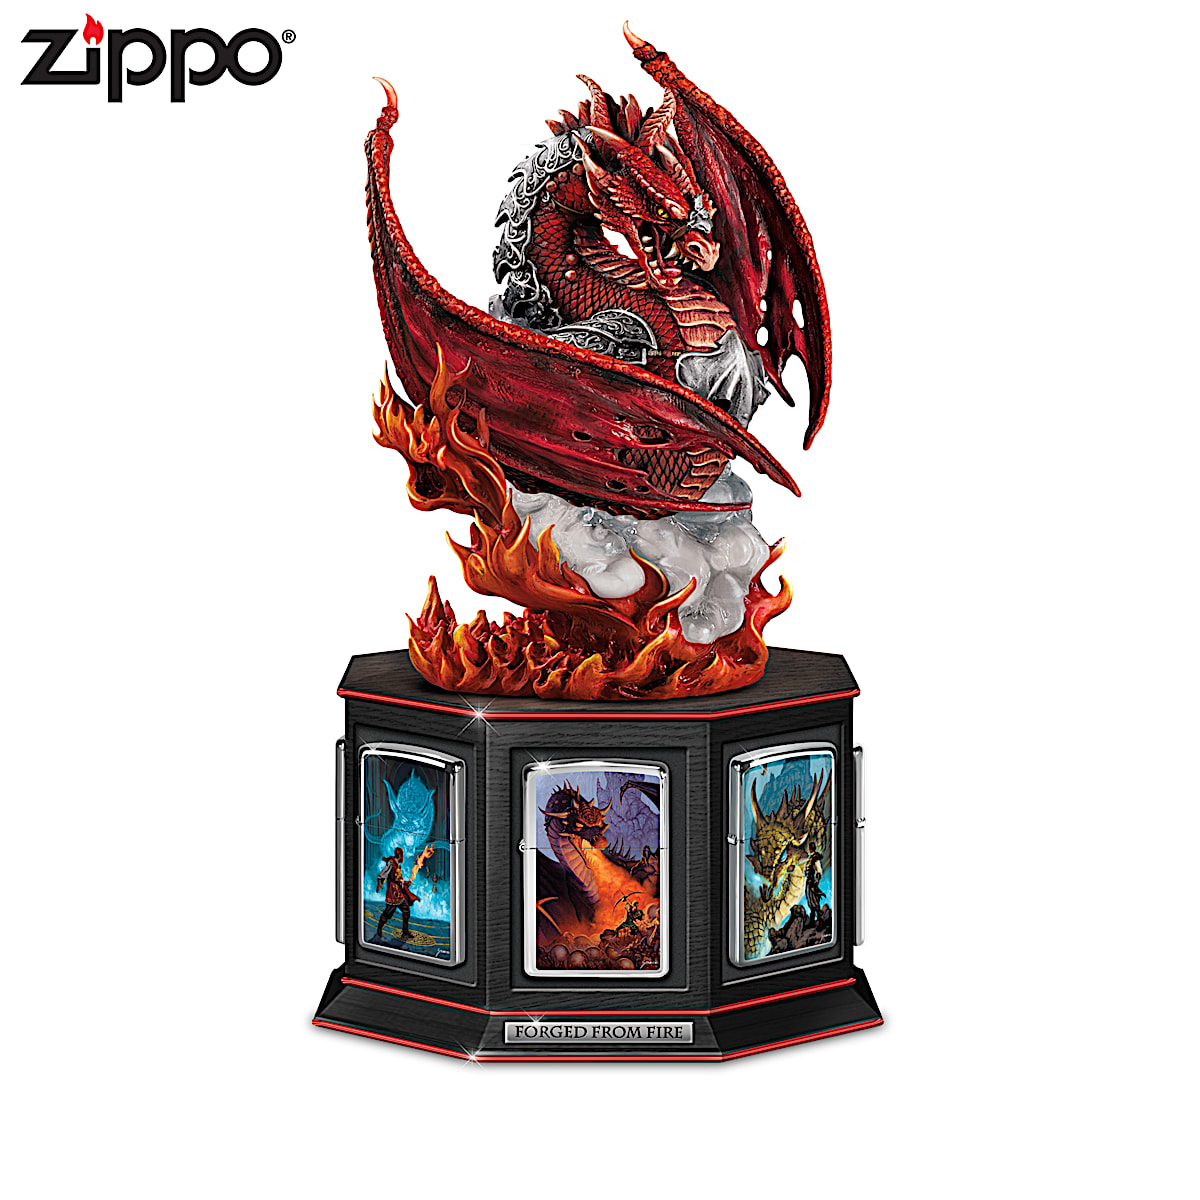 Dragon Art Zippo® Collection With Illuminated Display